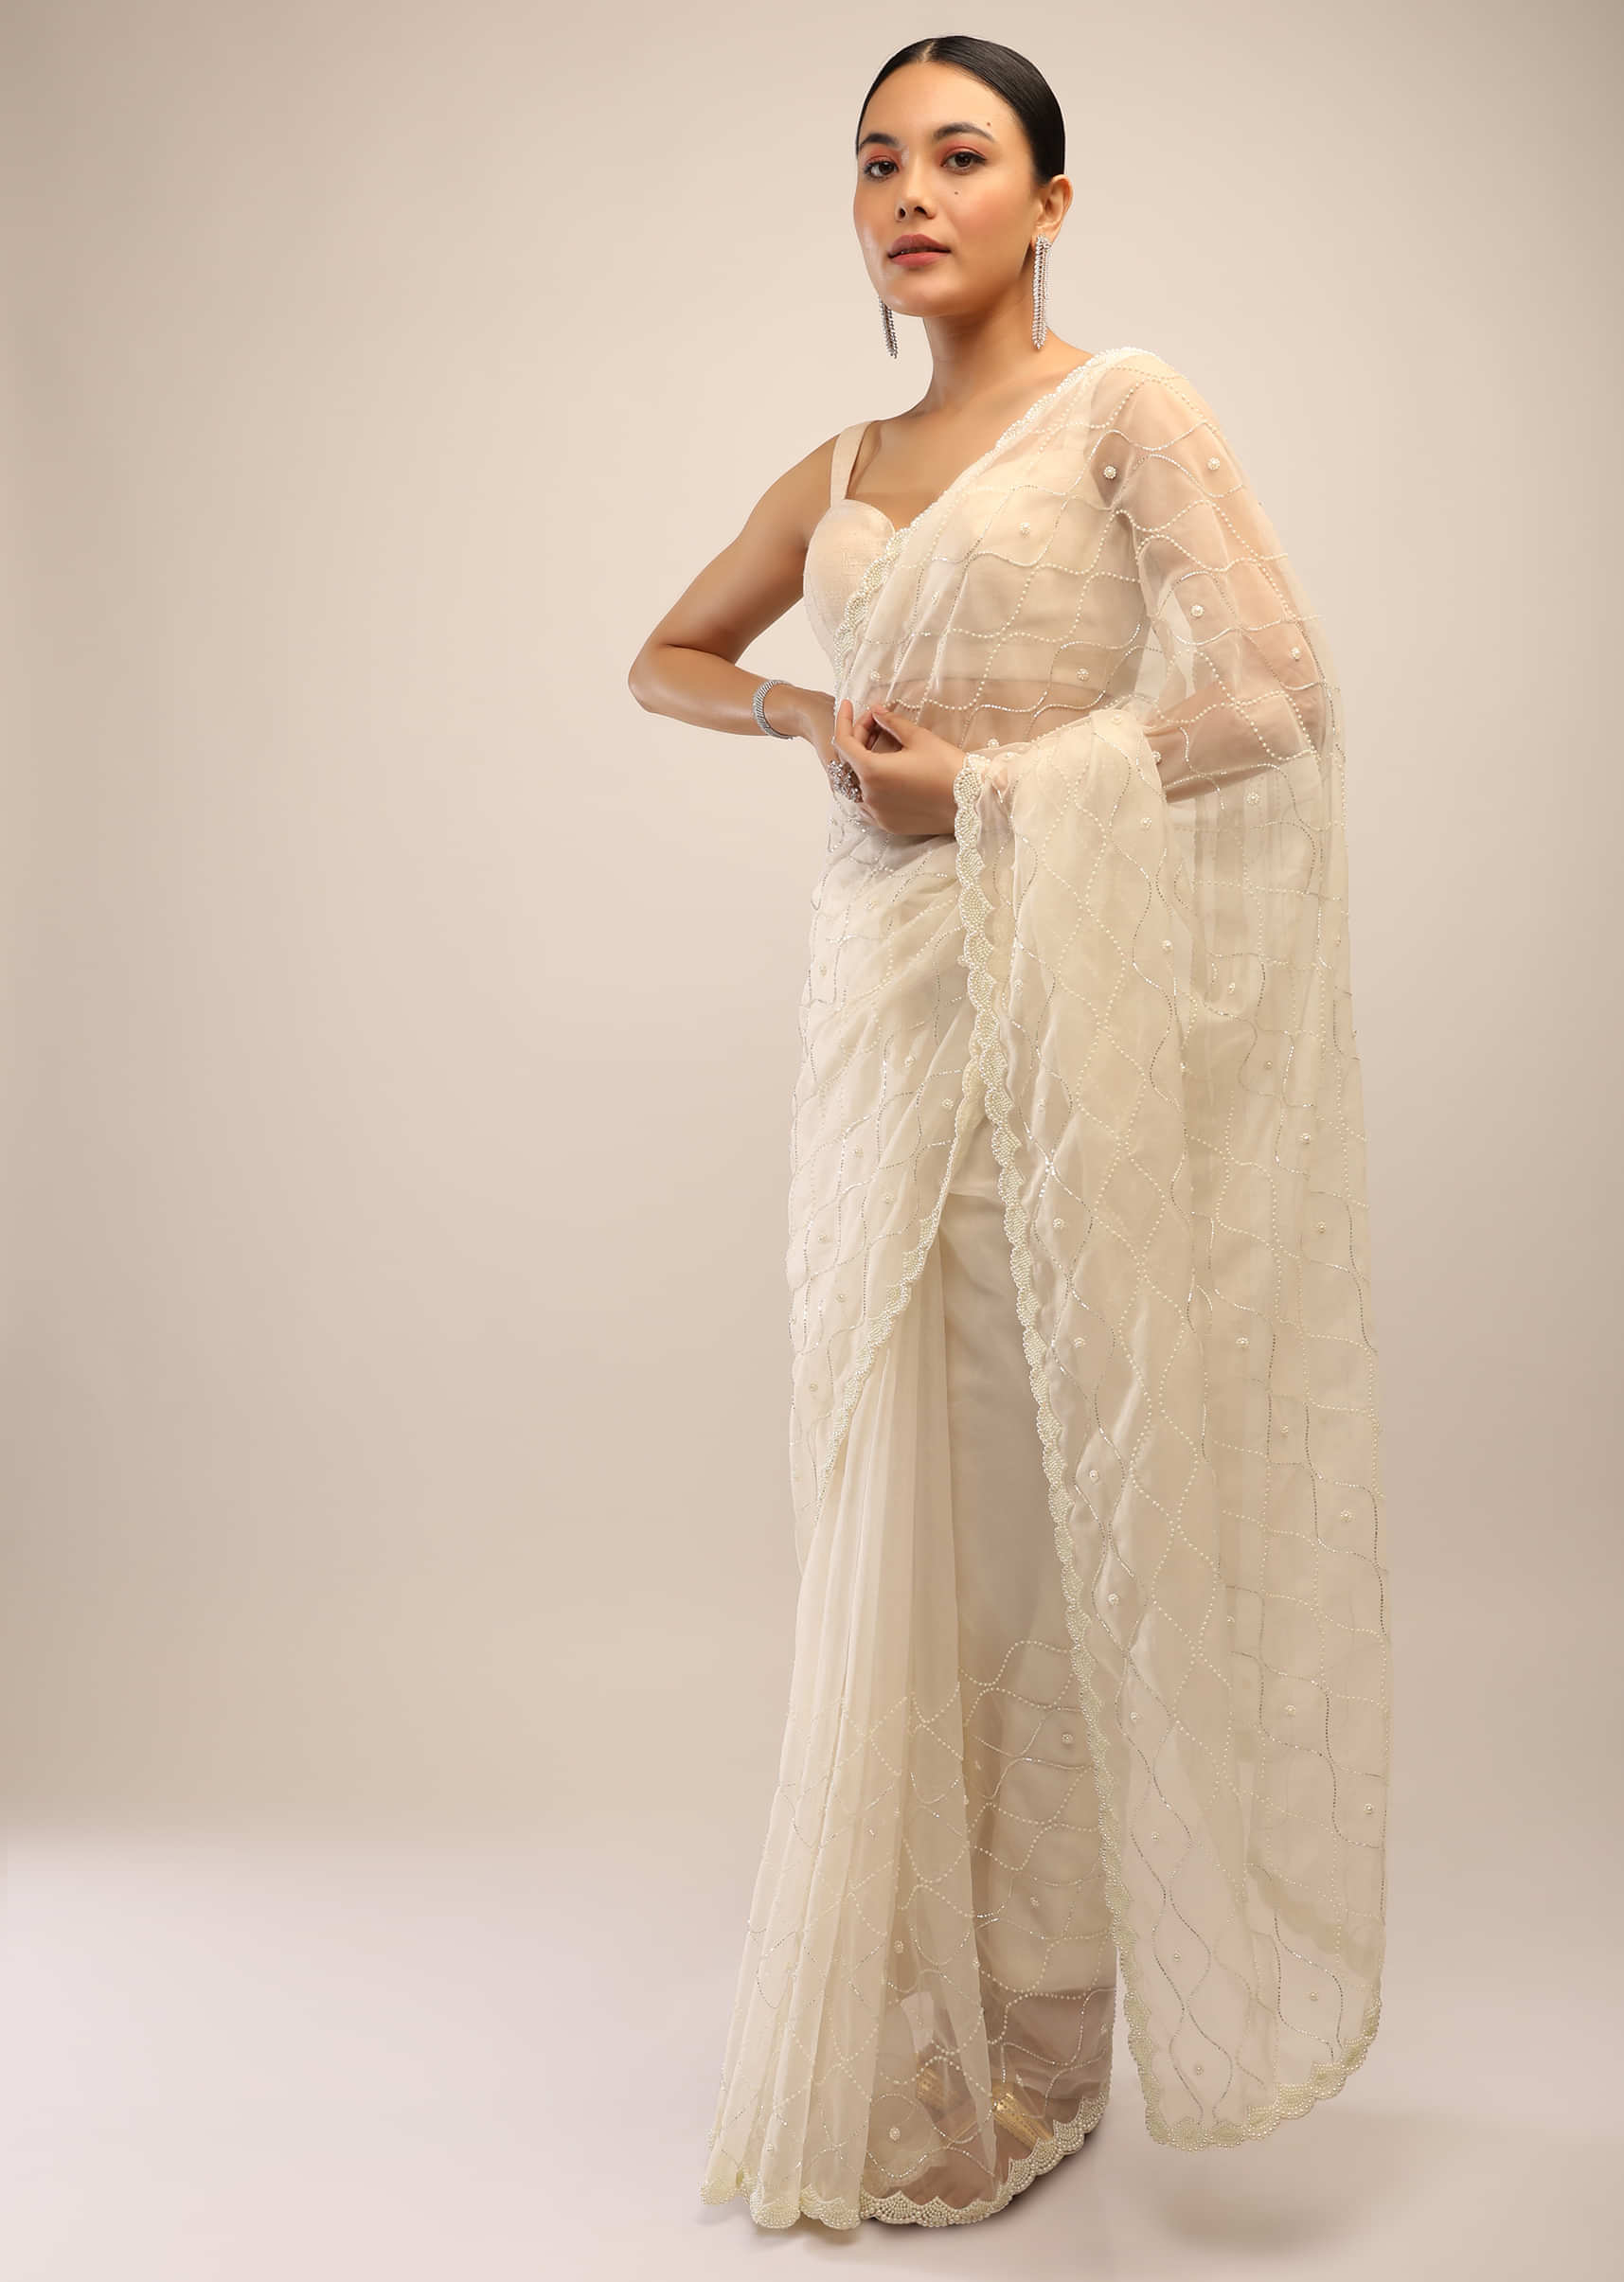 Pearl White Saree In Organza With Cut Dana And Pearl Mesh Motifs And Scallop Border